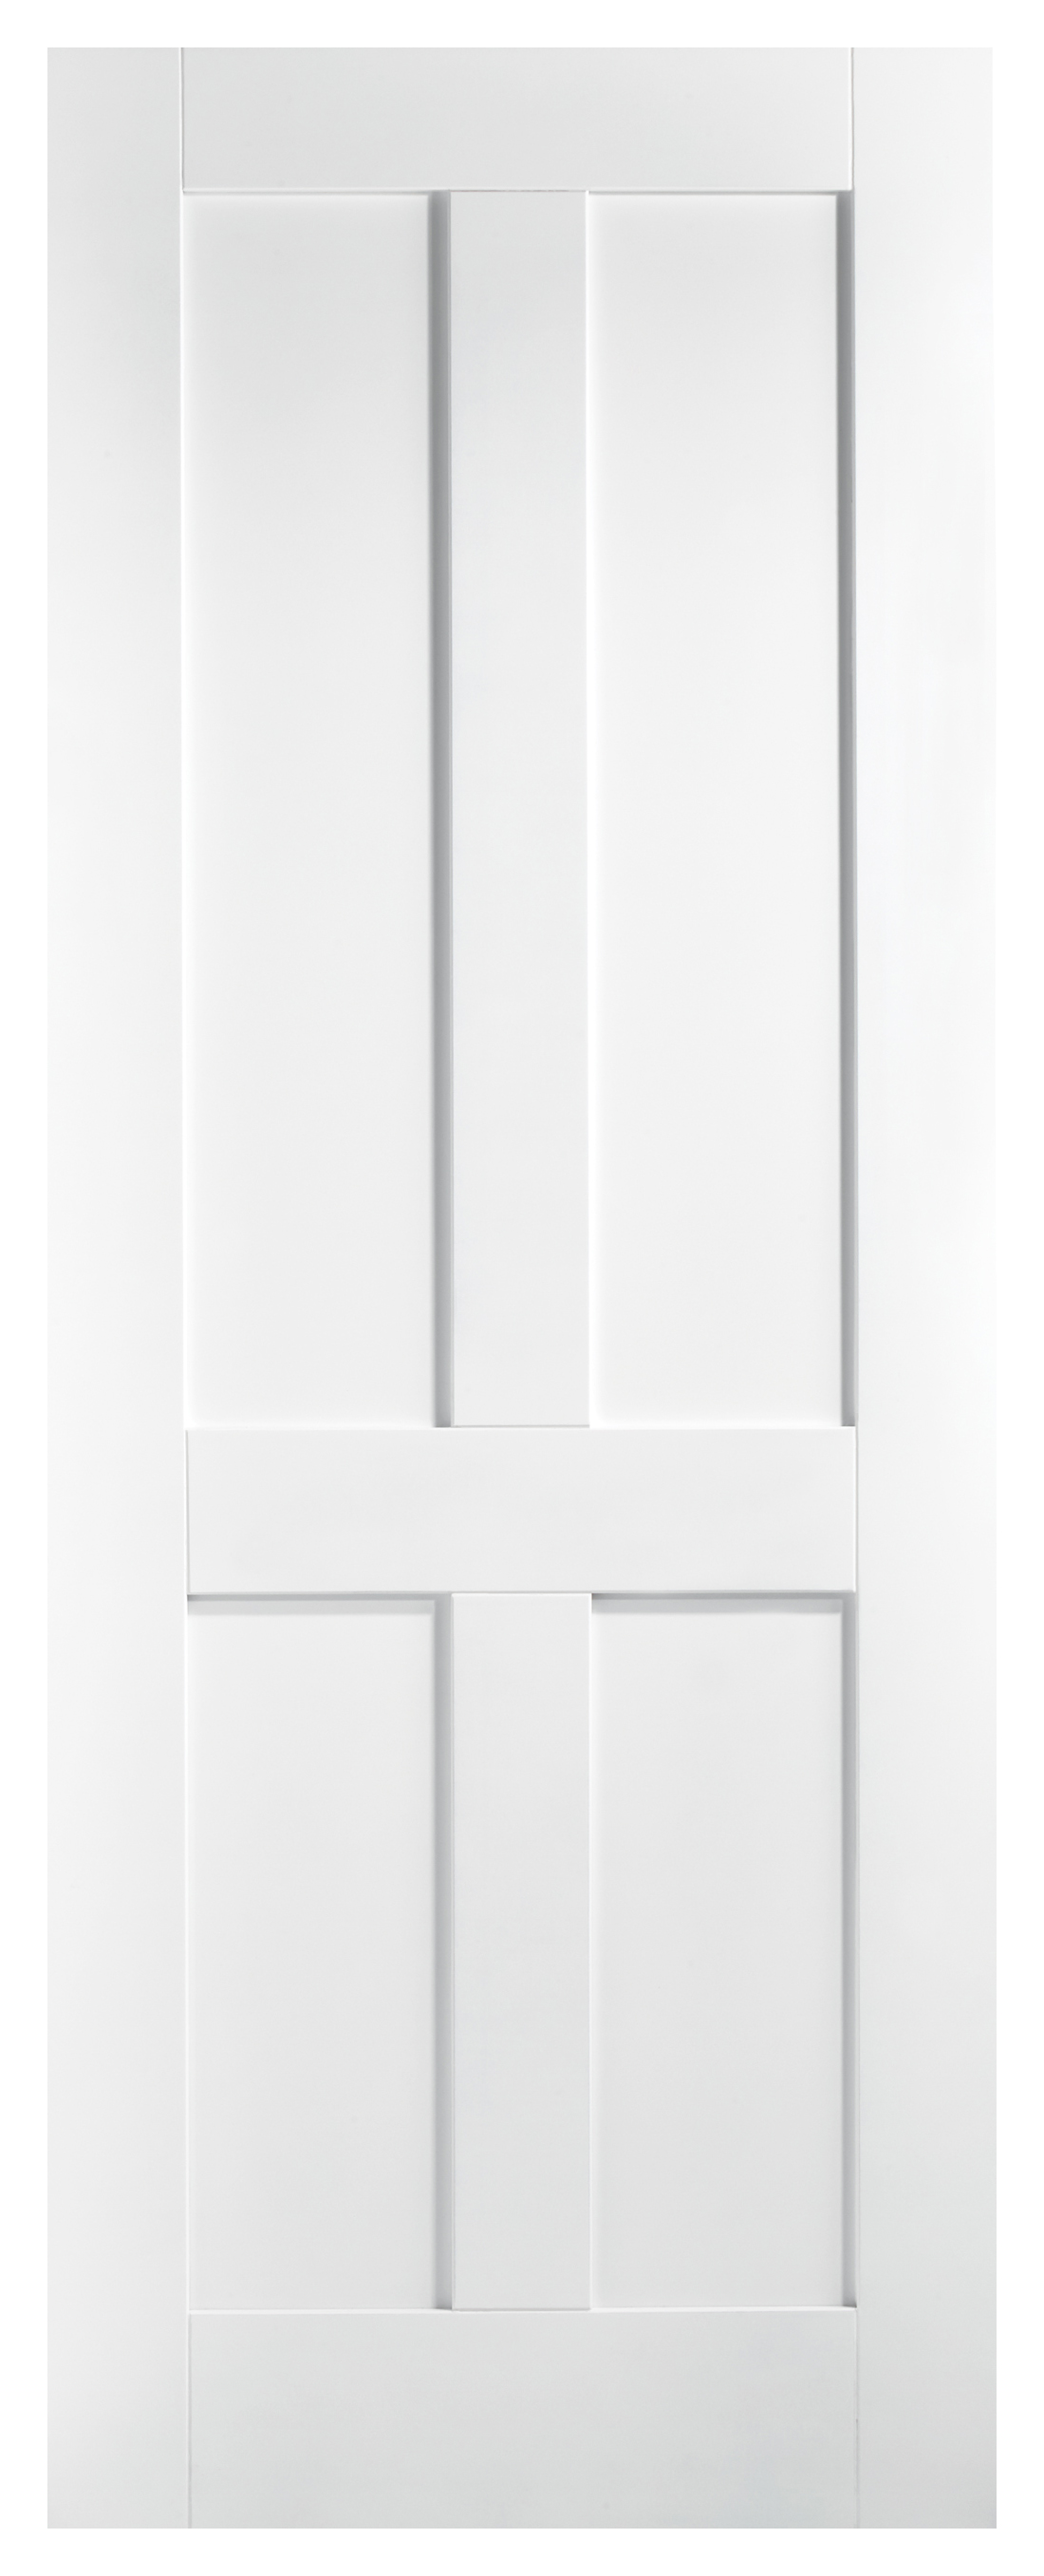 Image of LPD Internal London 4 Panel Primed White FD30 Fire Door - 838 x 1981mm